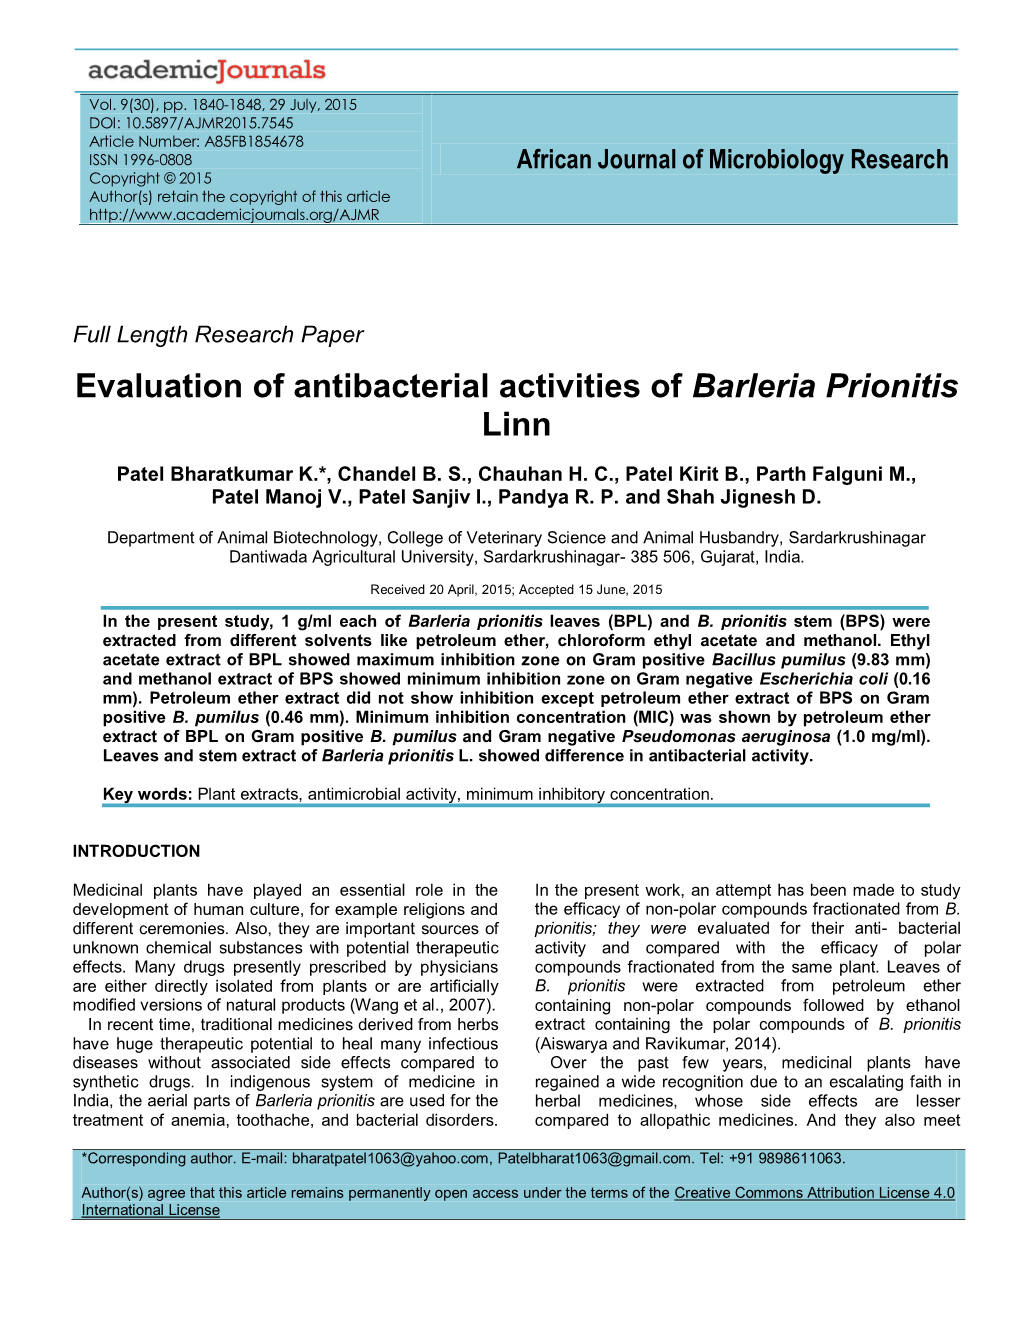 Evaluation of Antibacterial Activities of Barleria Prionitis Linn